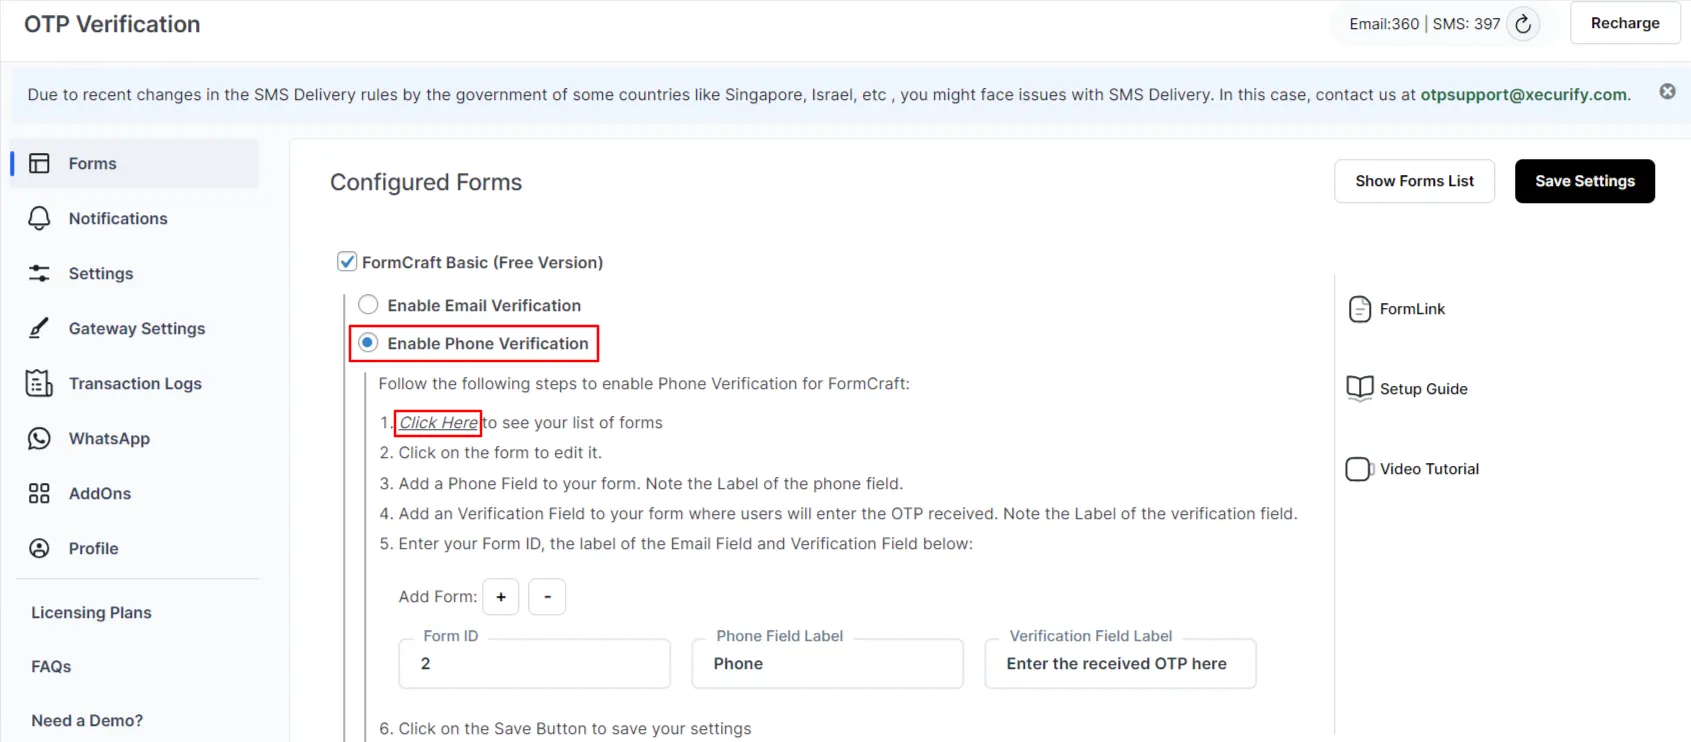 Free otp verification formcraft basic - Enable phone verification